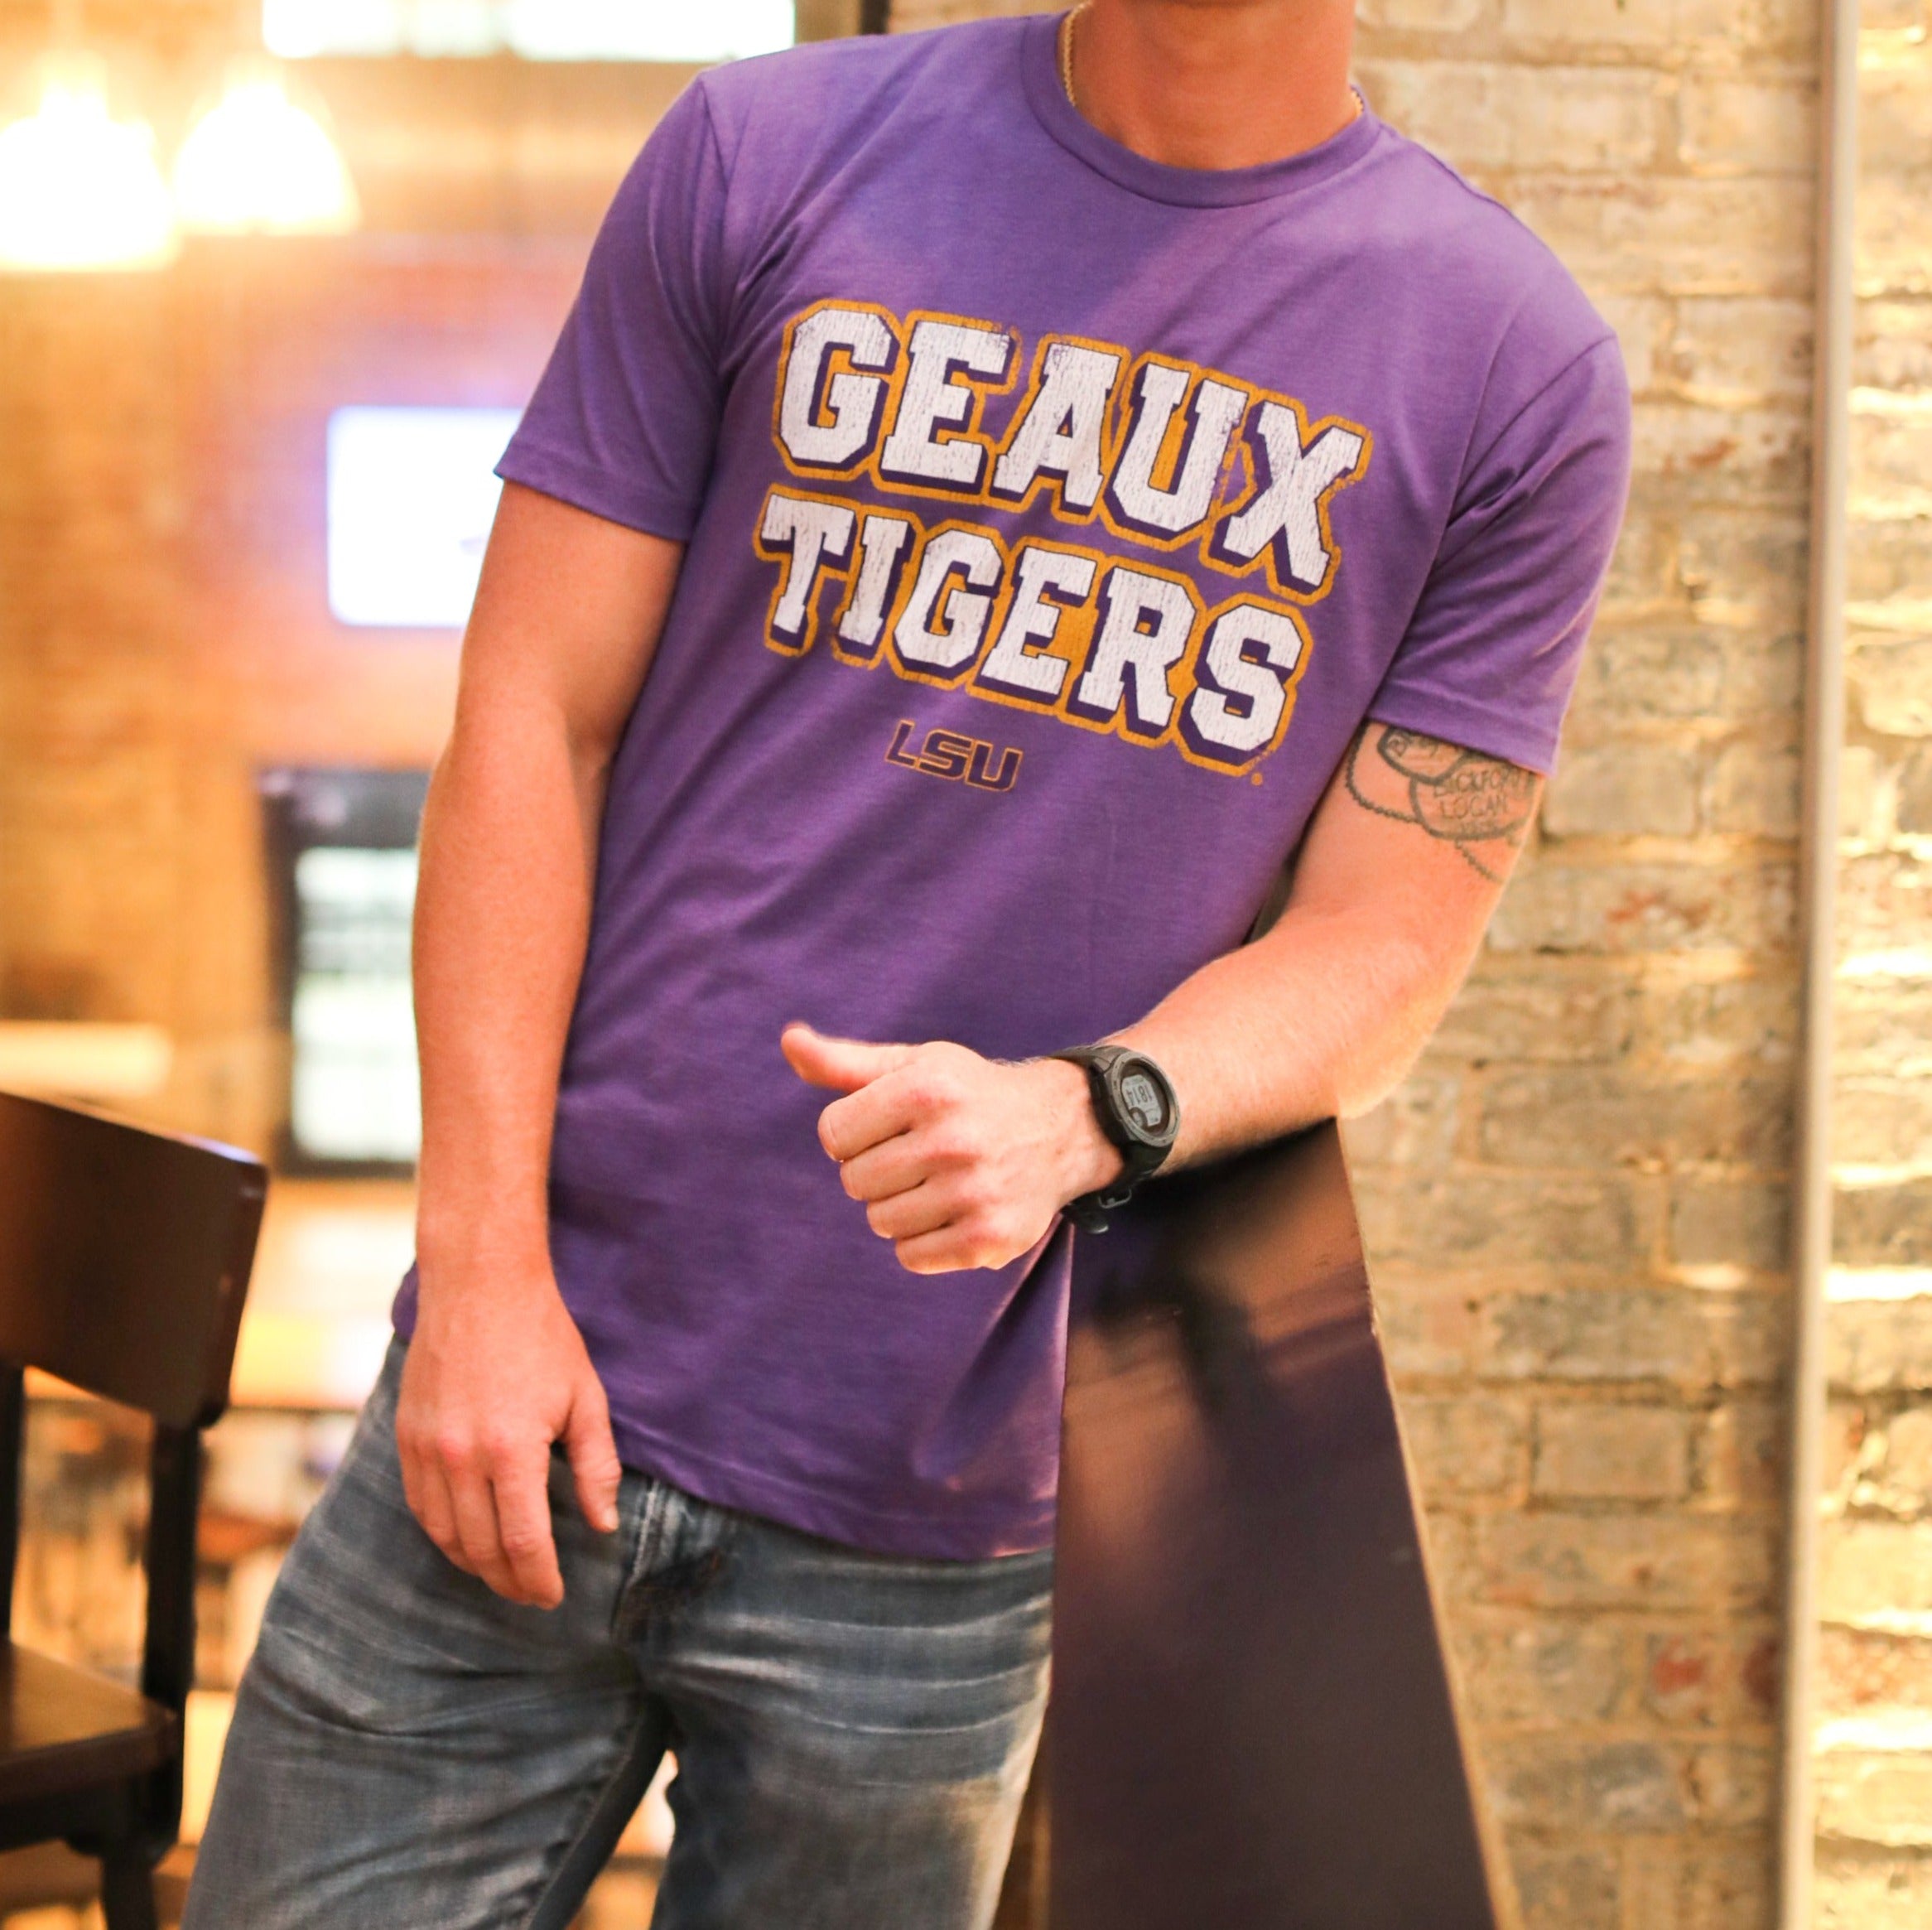 Louisiana Saturday Night Tiger Pocket T-Shirt